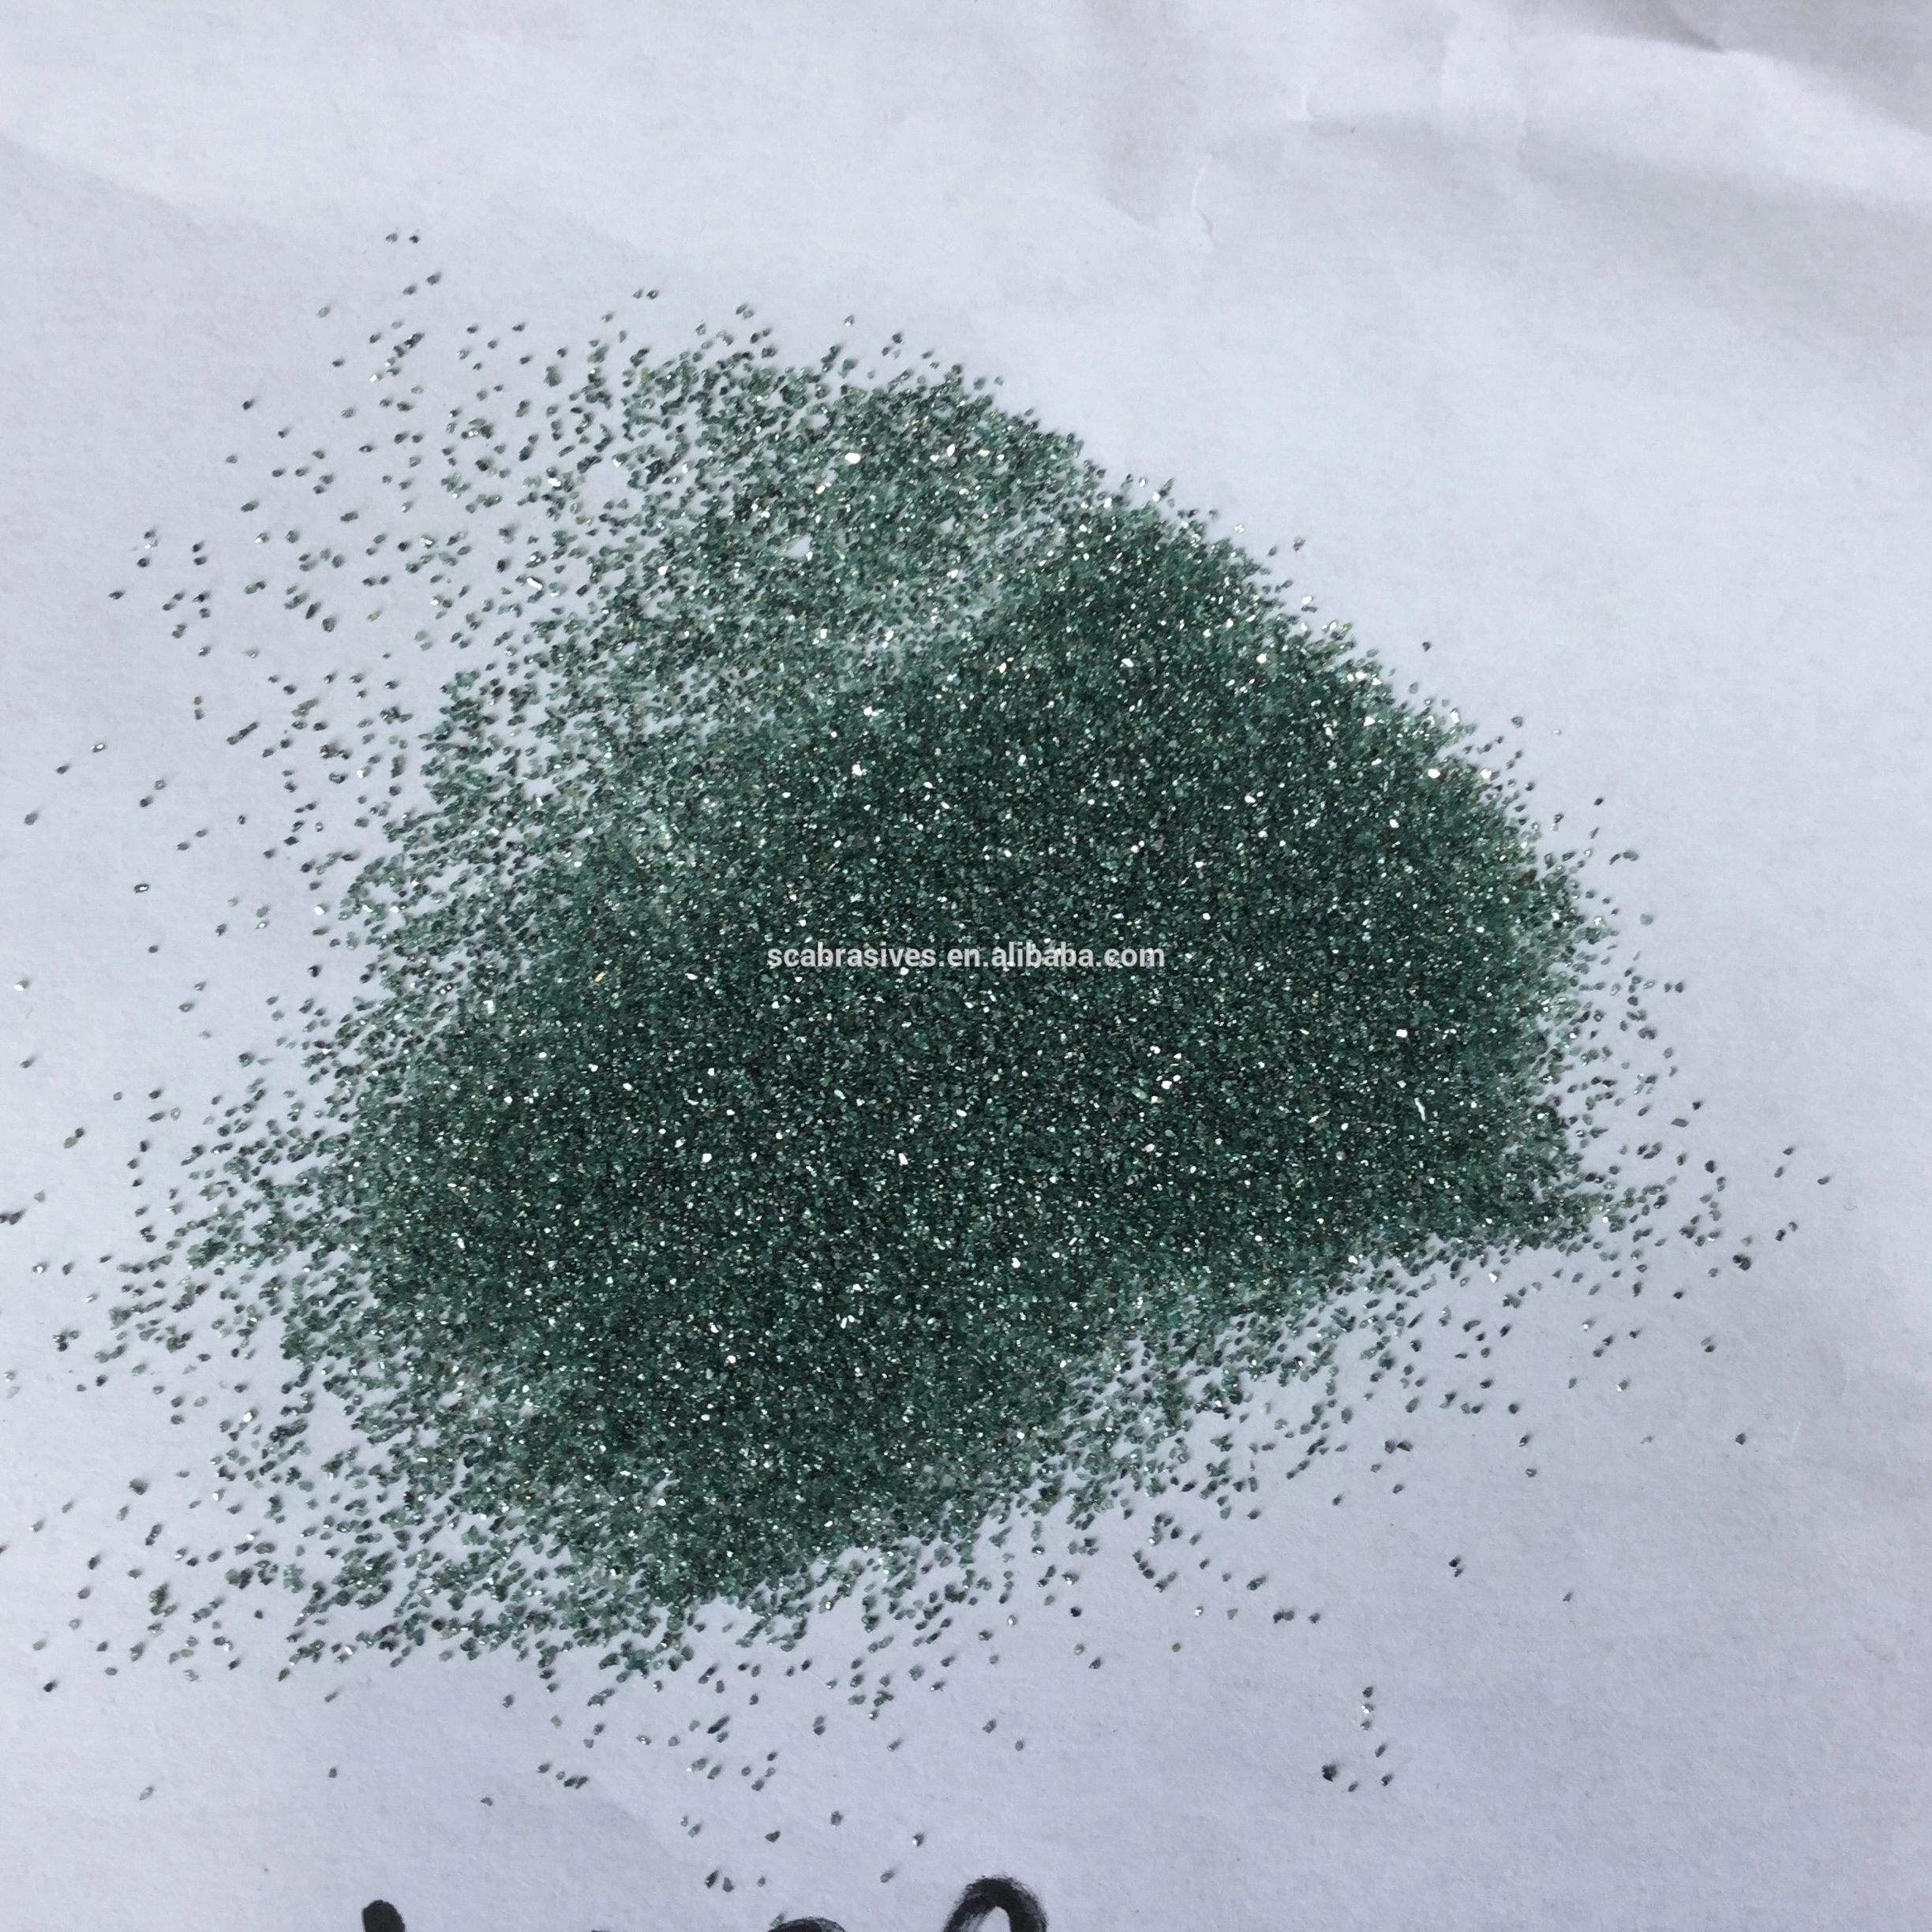 Quartz glass surface finishing materials green silicon carbide/carborundum/GC